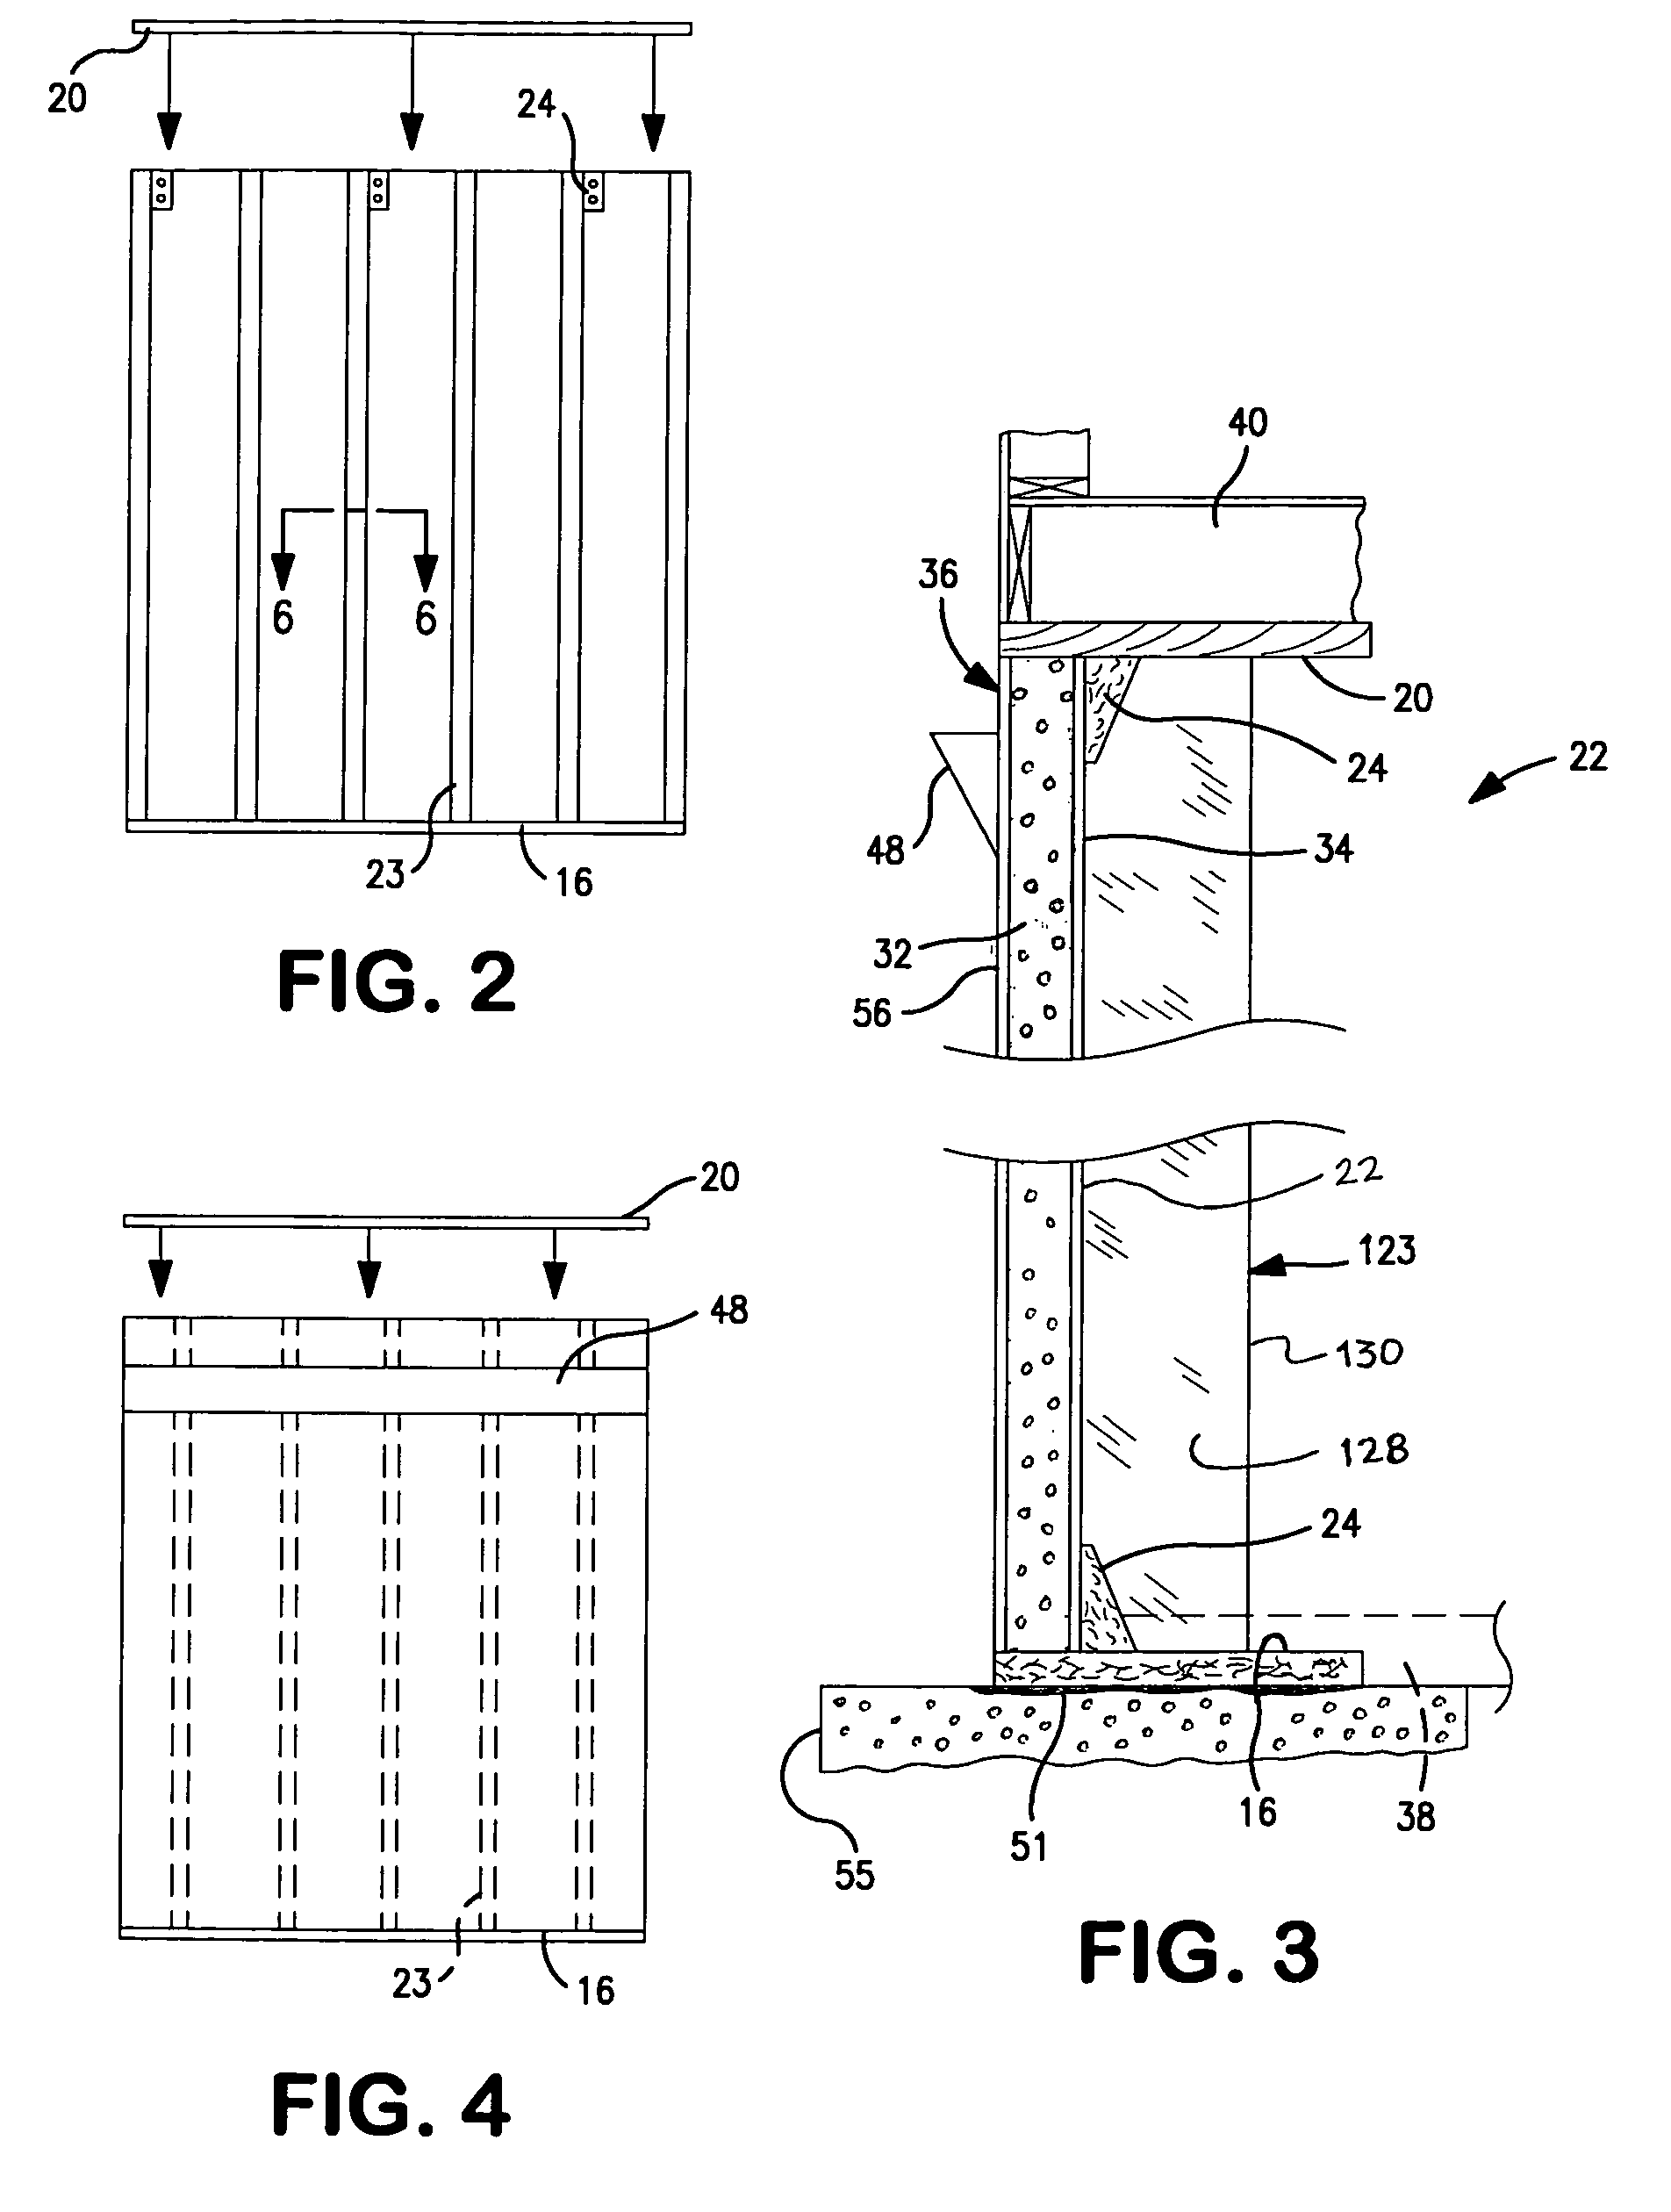 Method of fabricating building wall panels